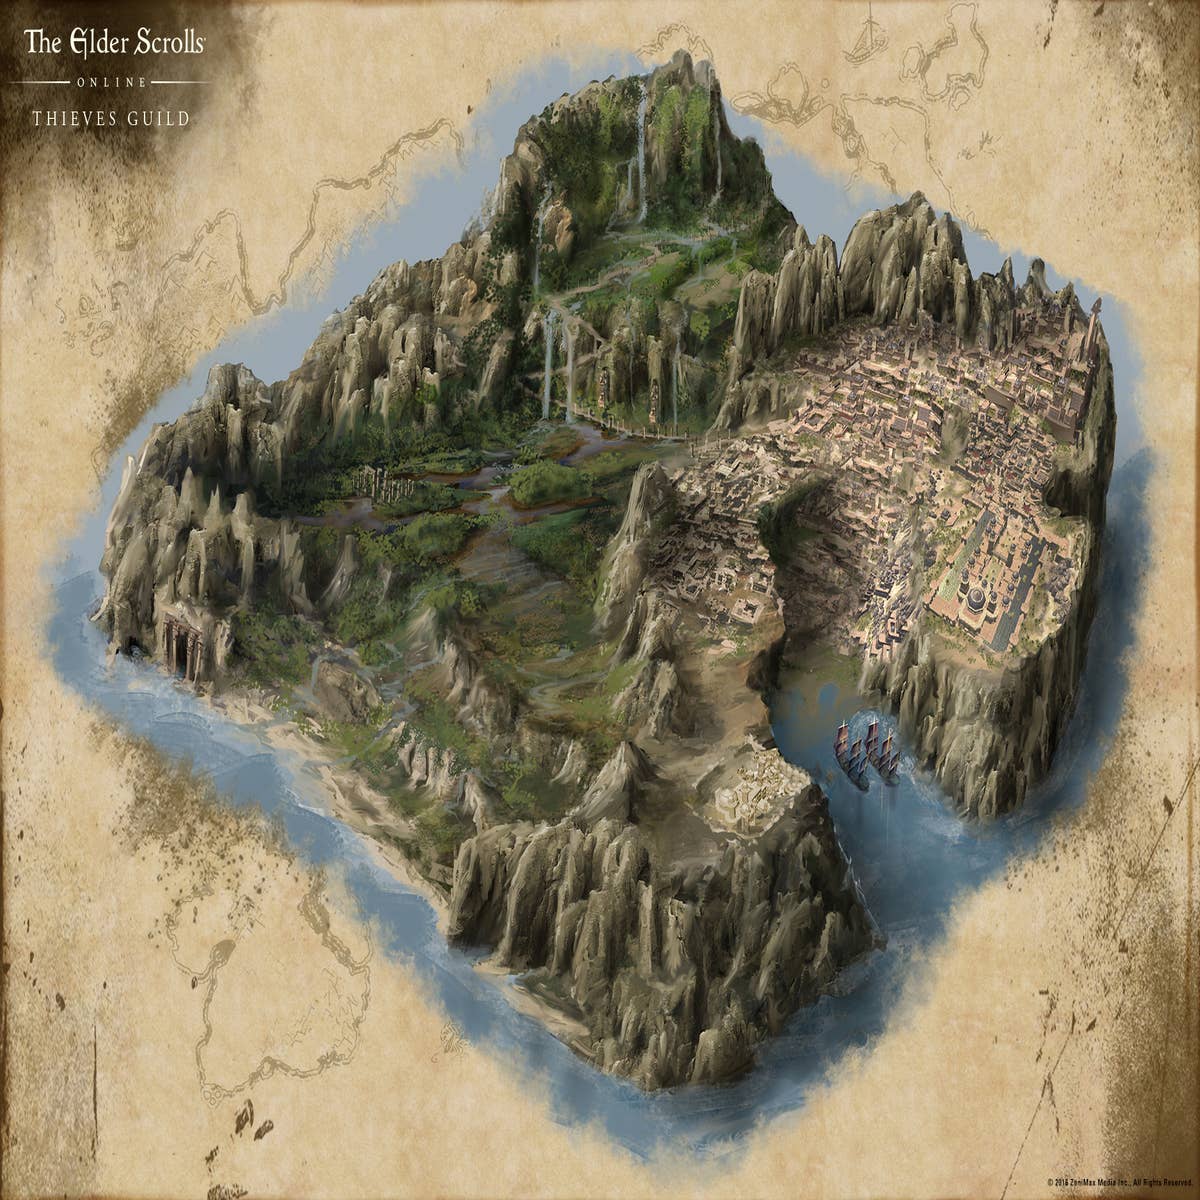 Elder Scrolls 6 location predications: Where we think Elder